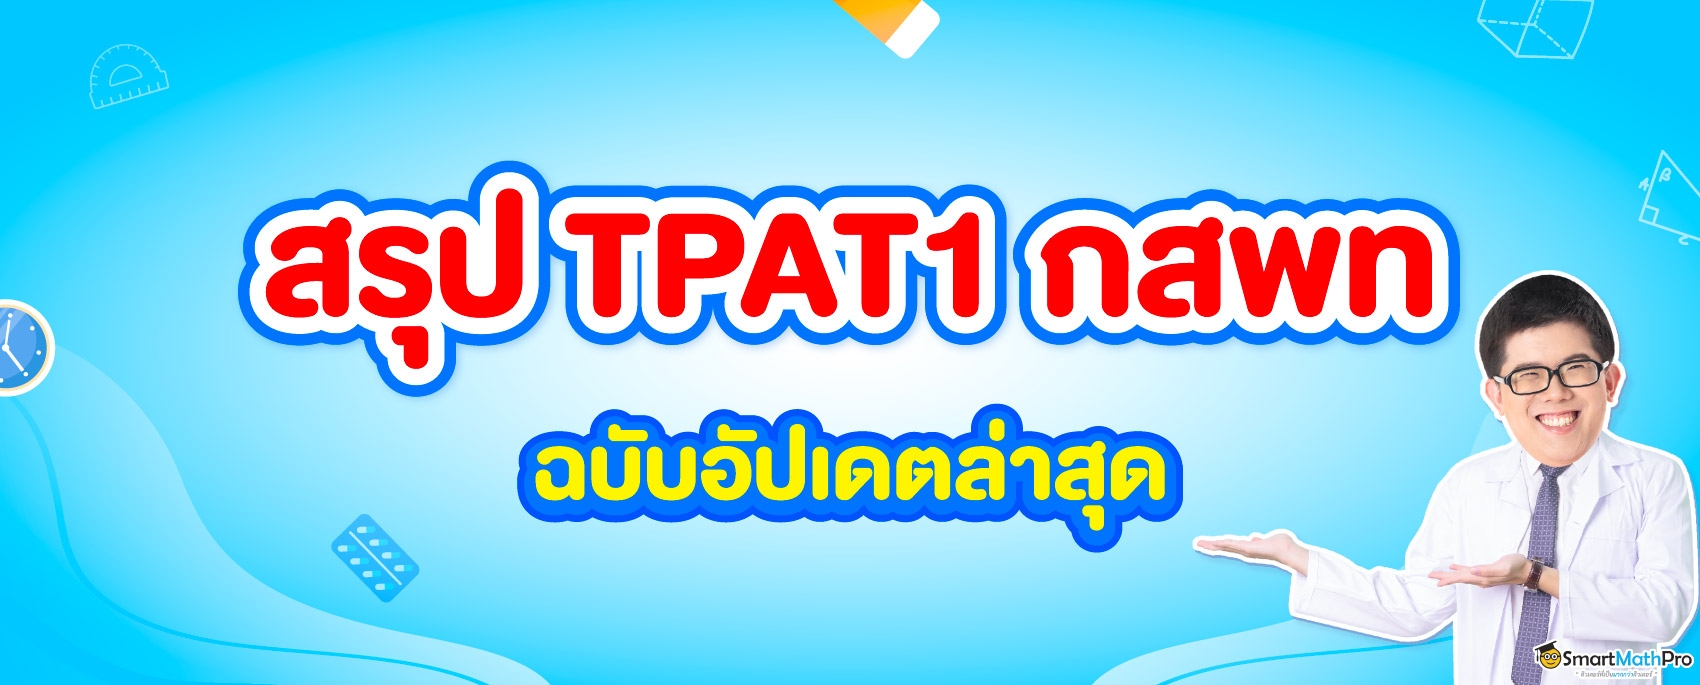 TPAT1-กสพท-1